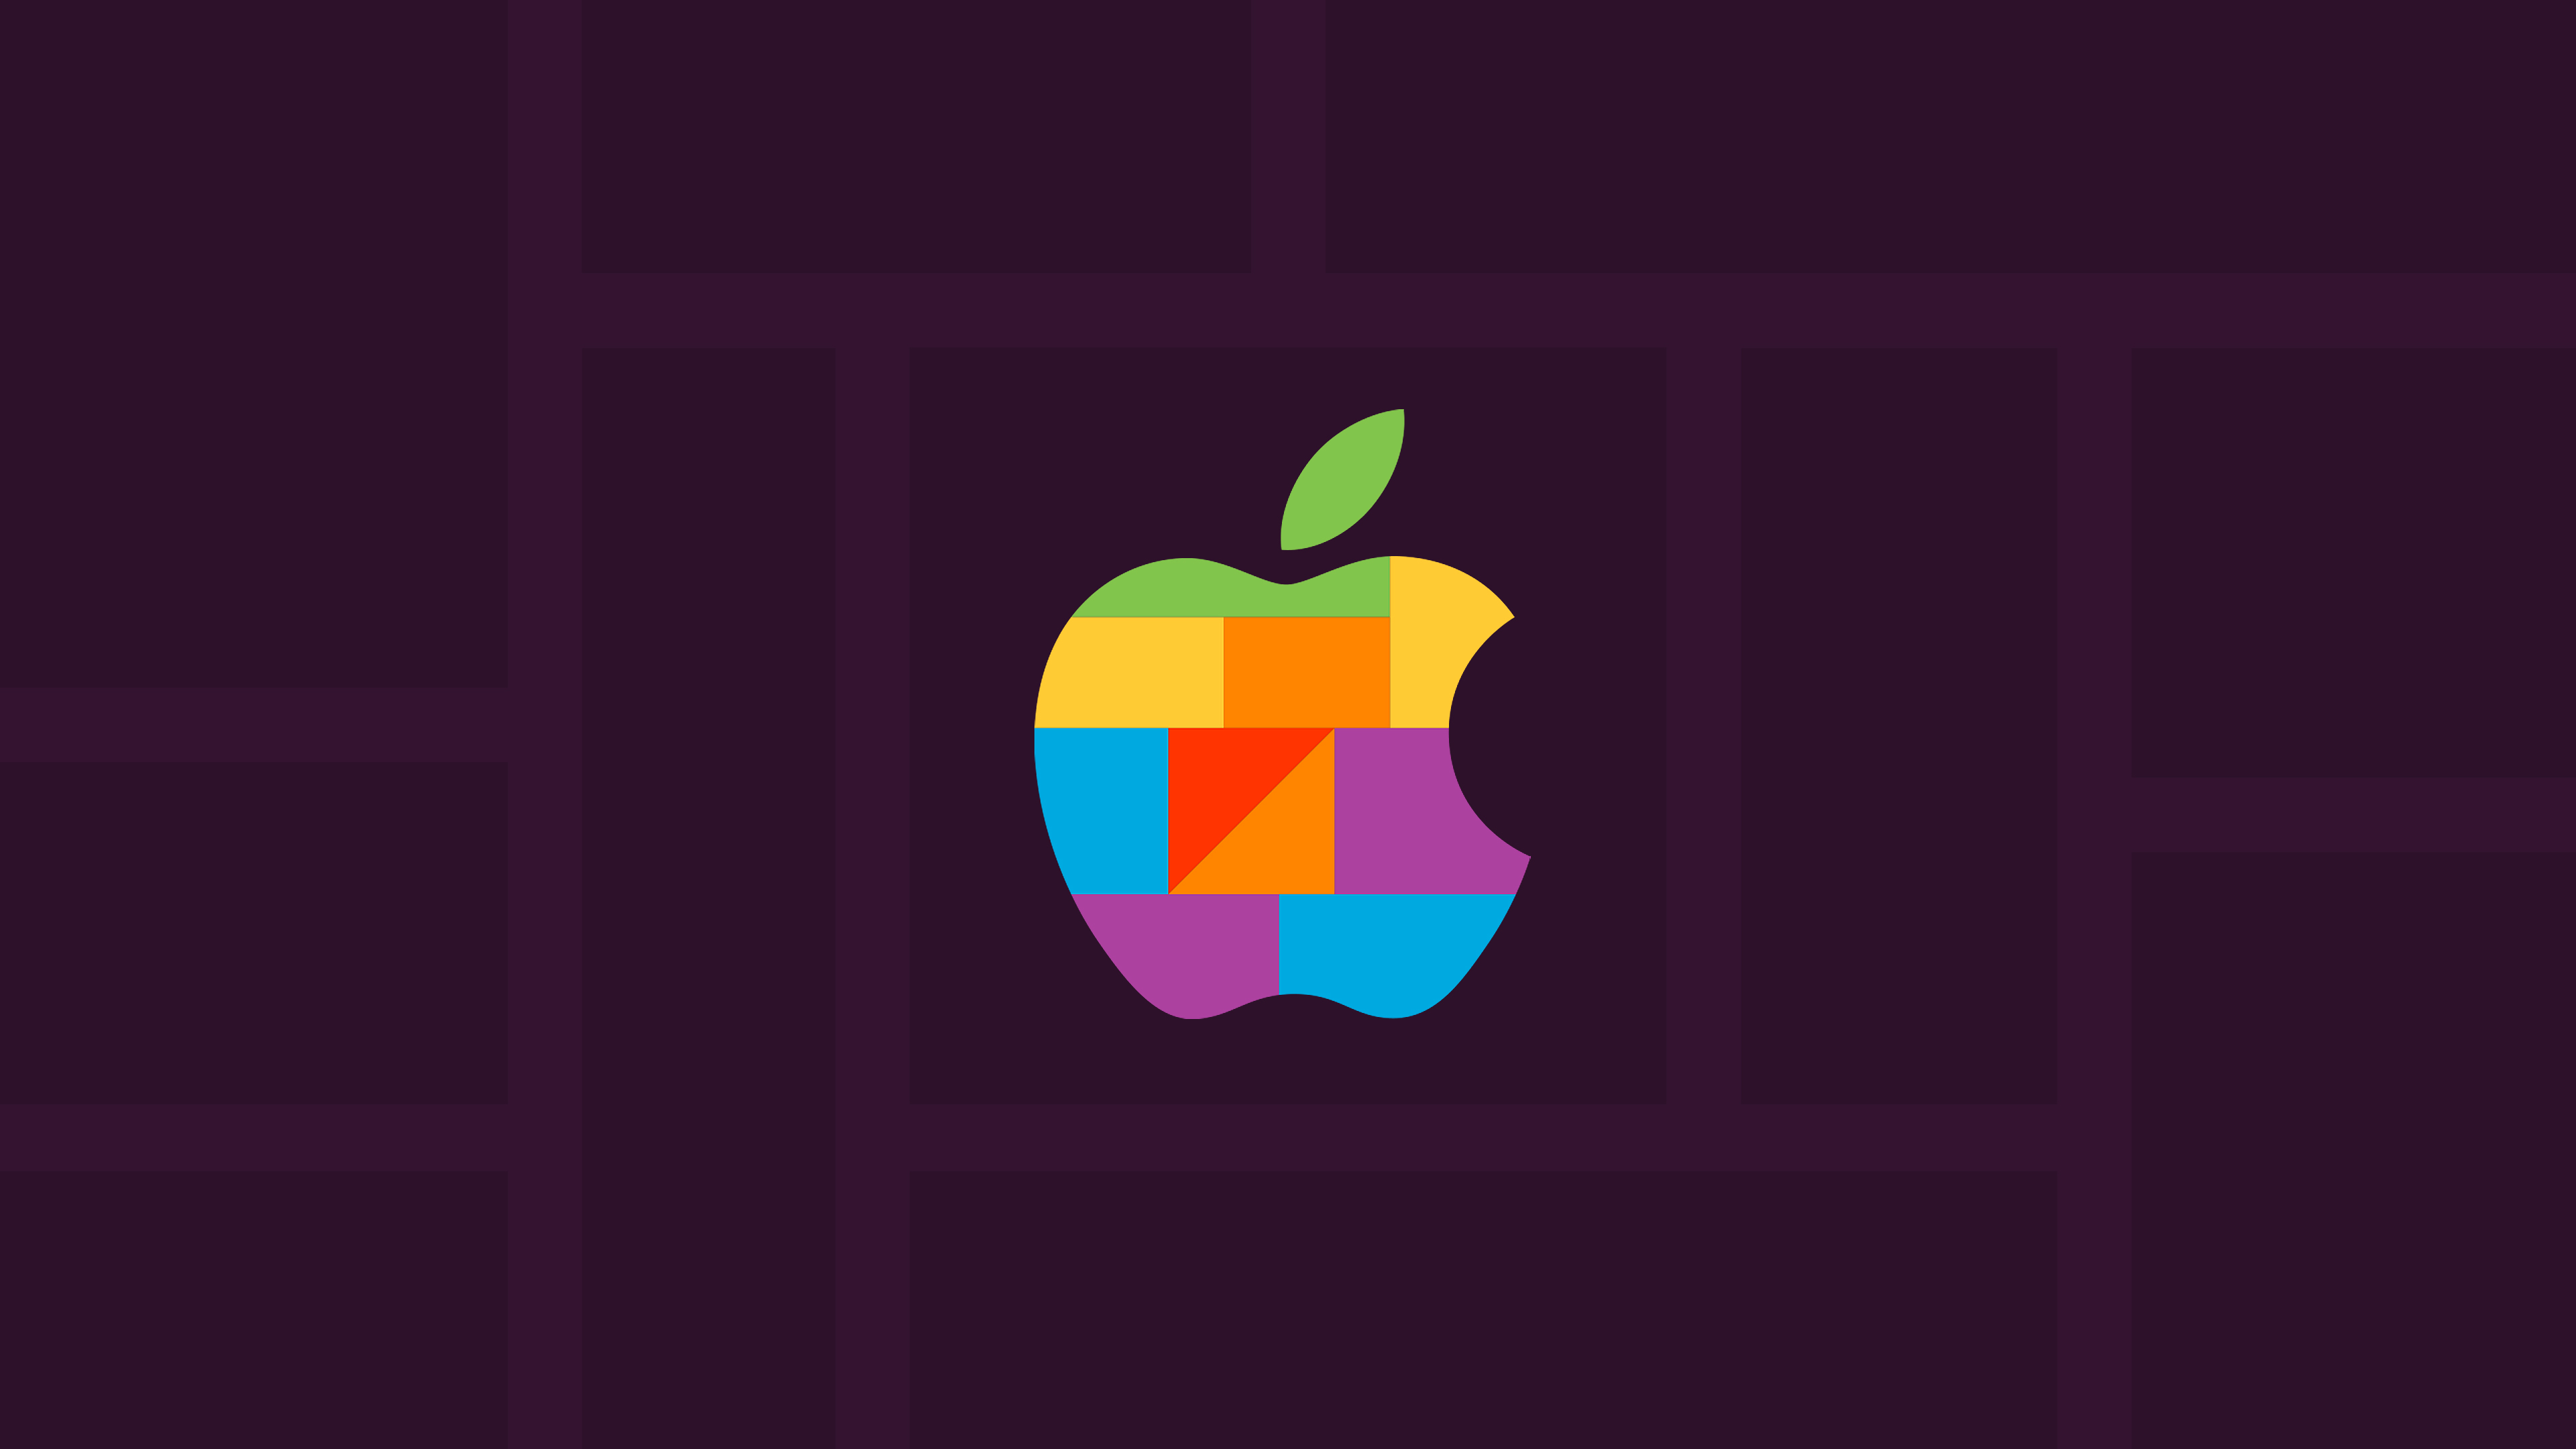 apple wallpaper,logo,font,graphic design,graphics,operating system